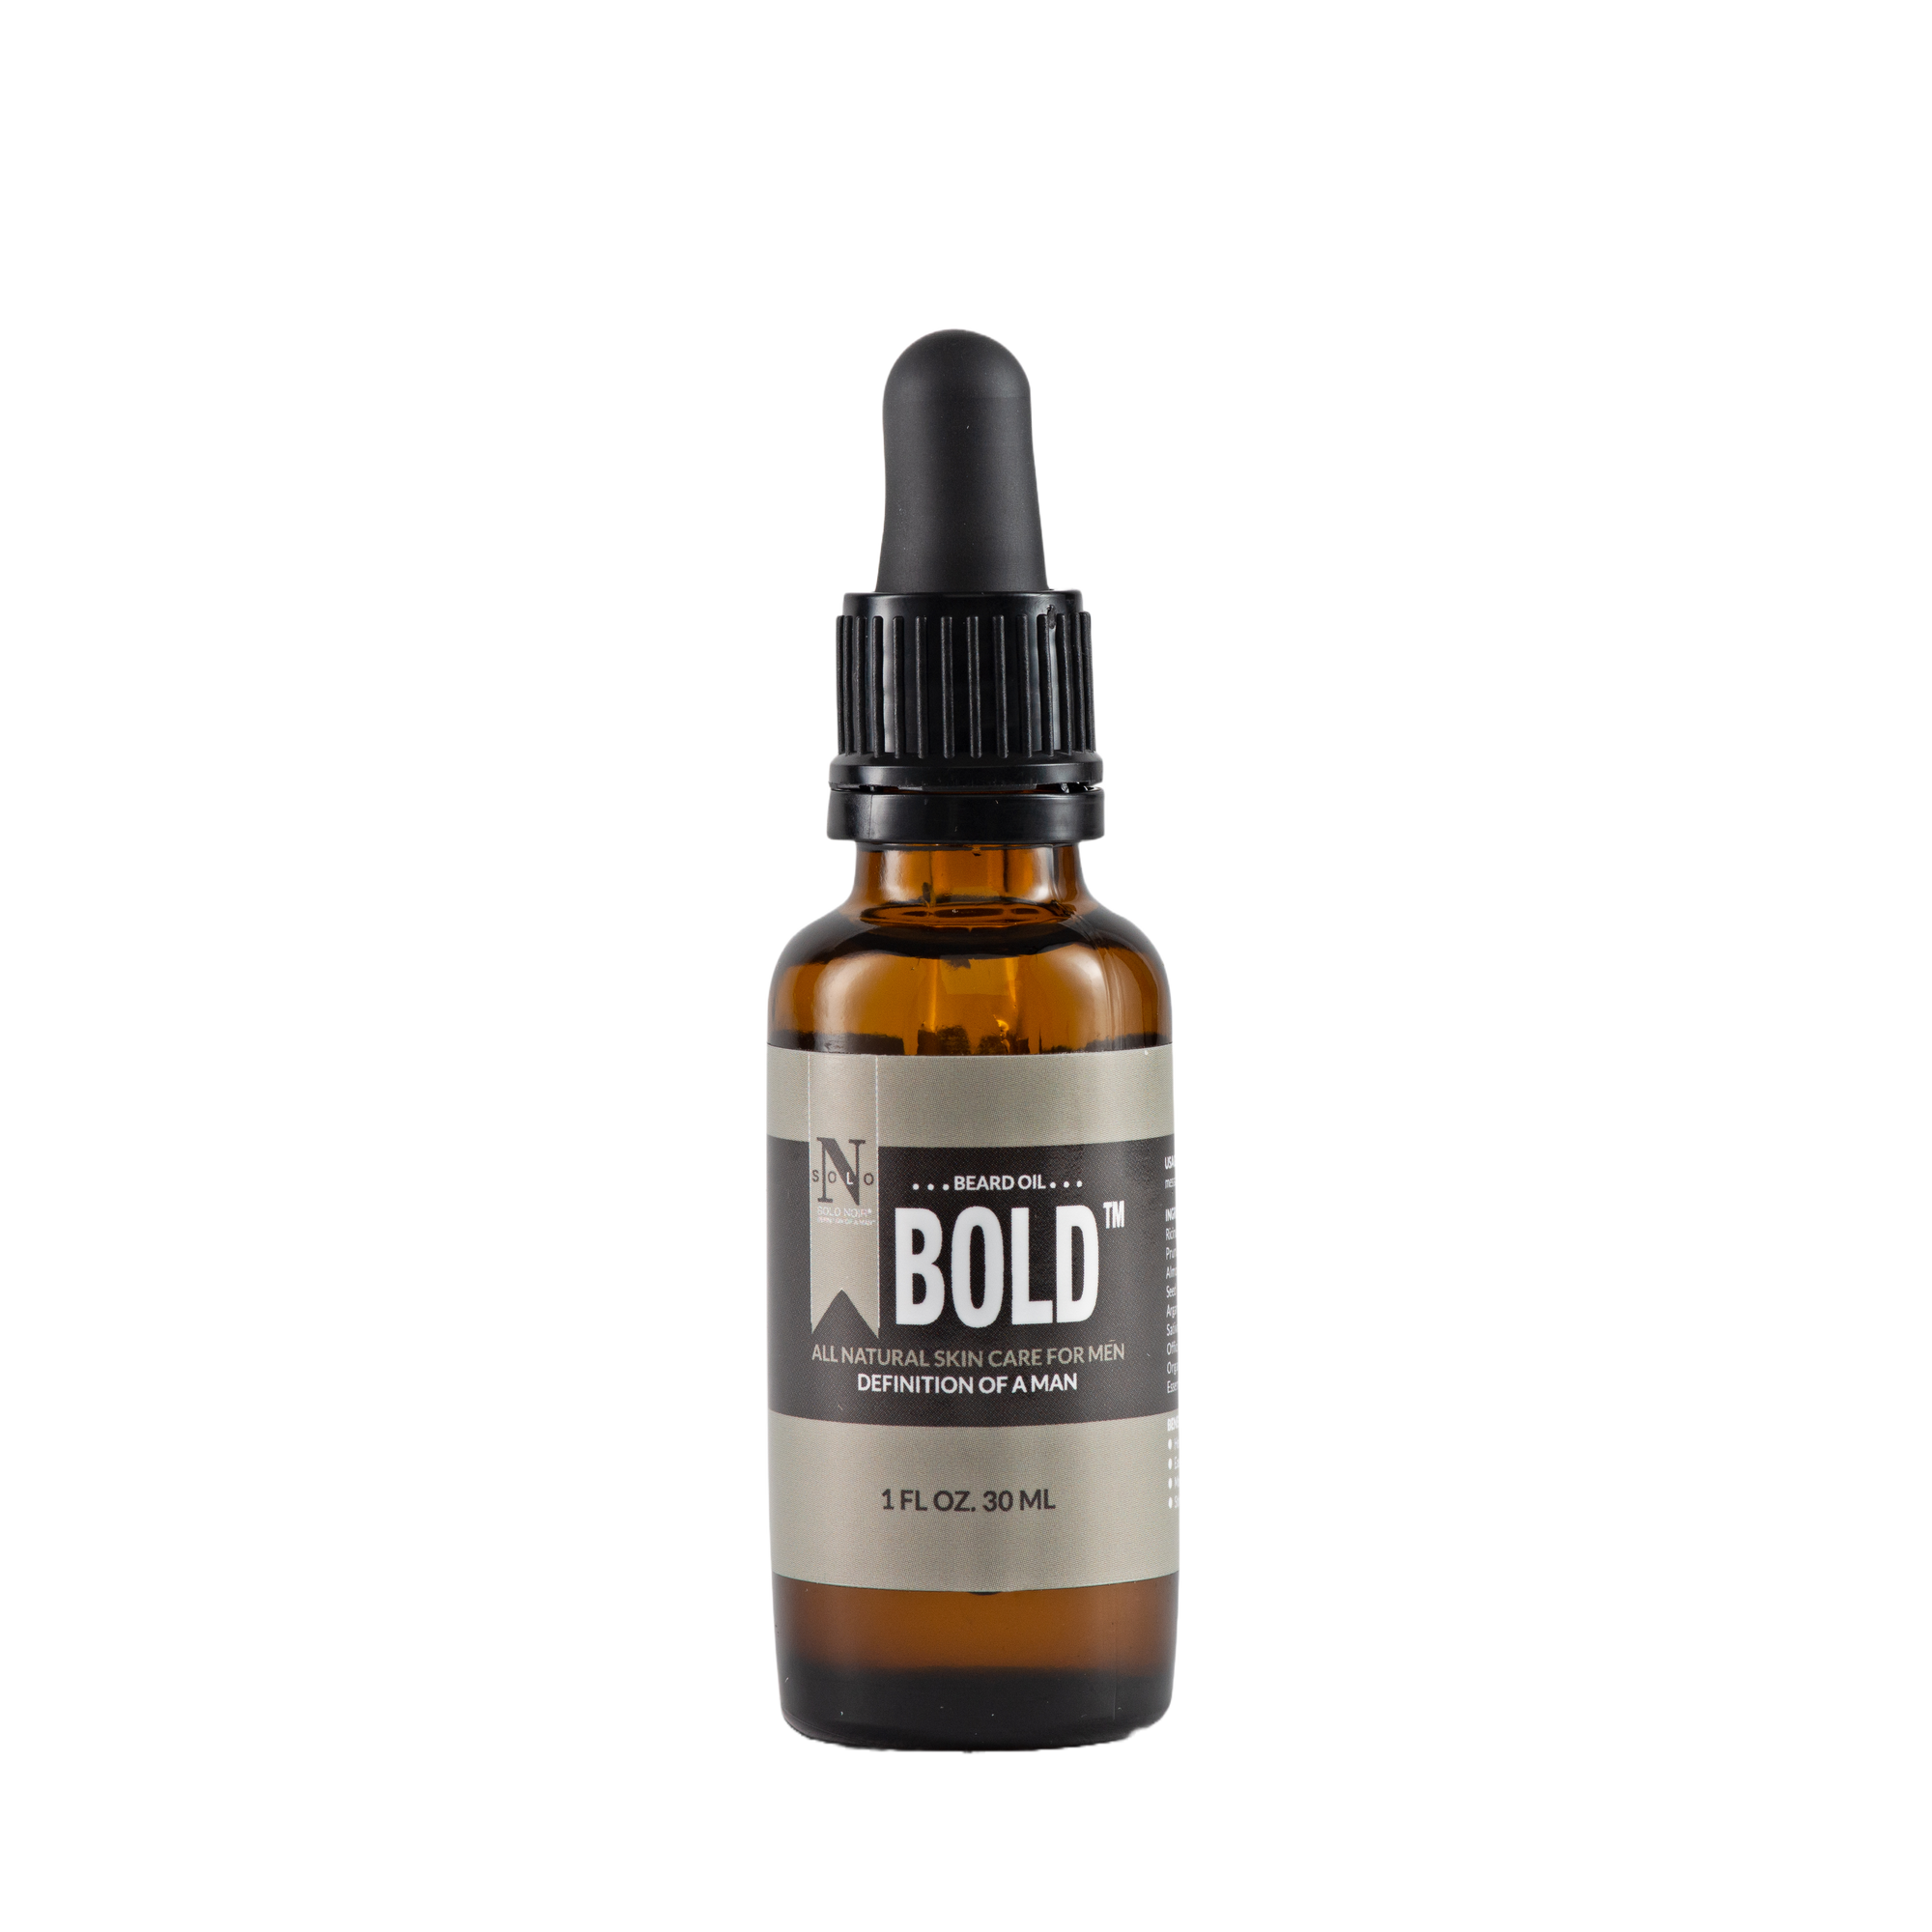 Solo Noir “BOLD™” Pre-shave Oil + Beard Oil 1oz